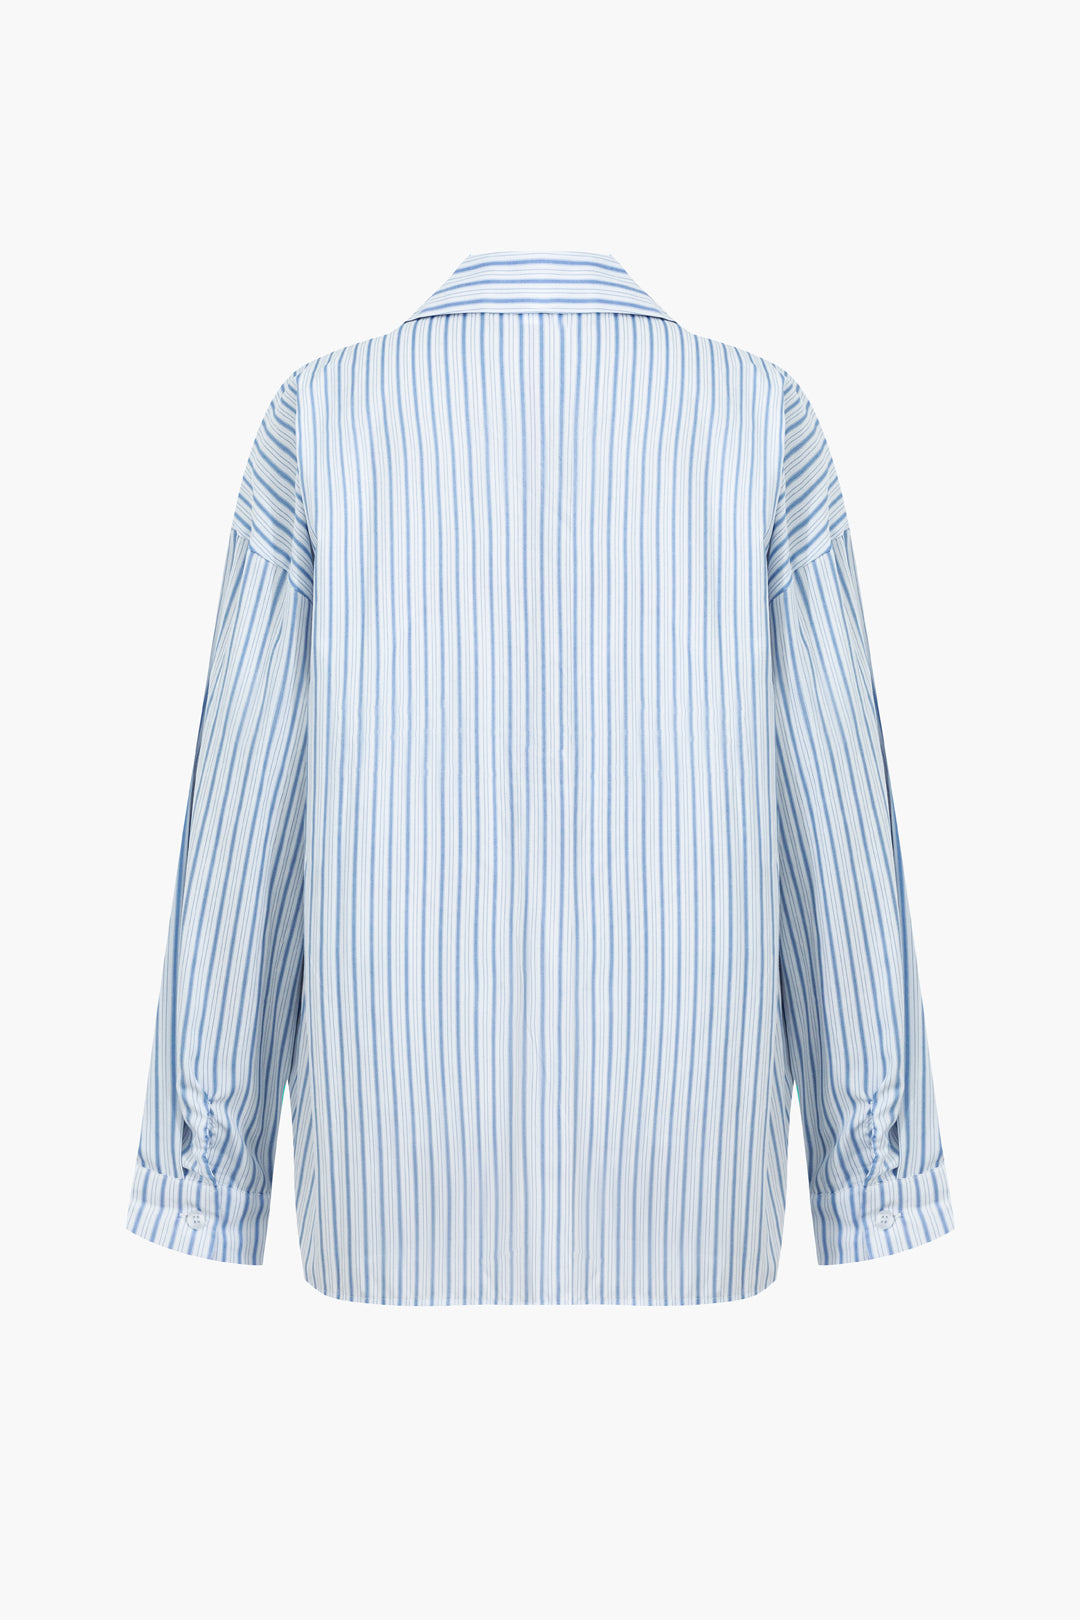 Patchwork Stripe Long Sleeve Shirt